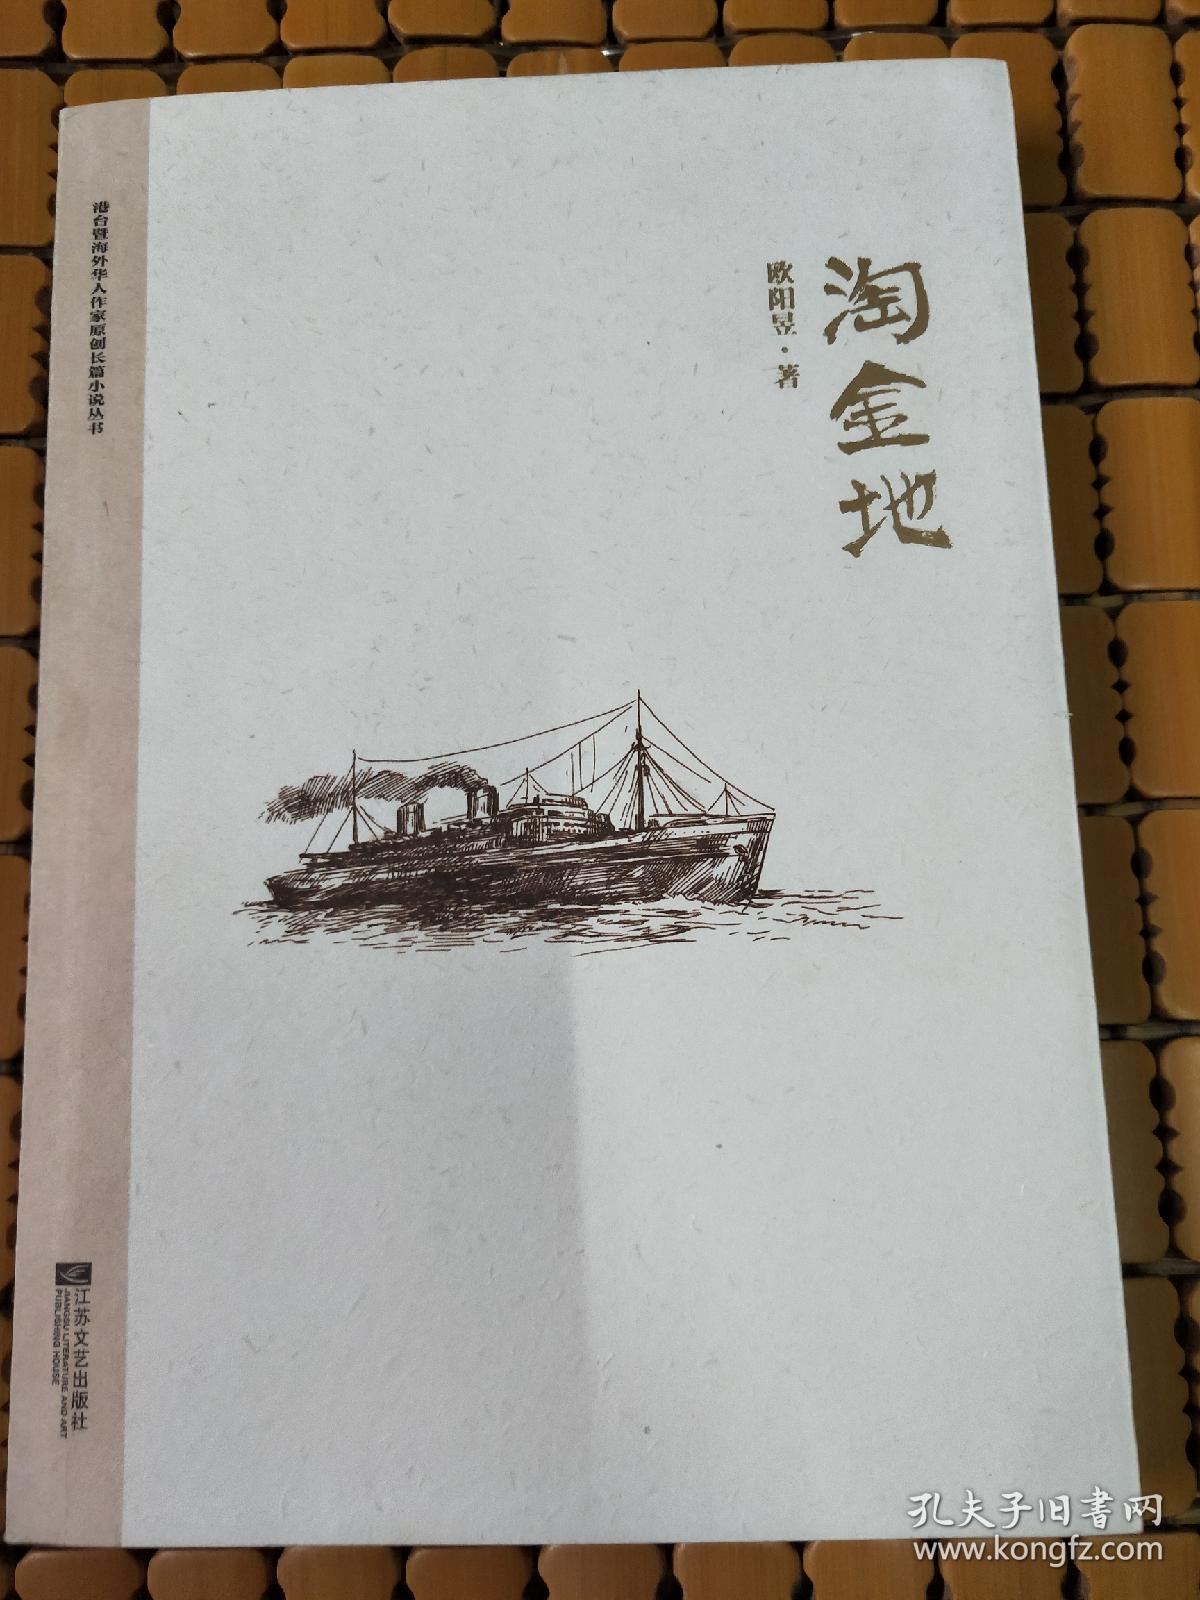 my Chinese novel about Australia: 《淘金地》